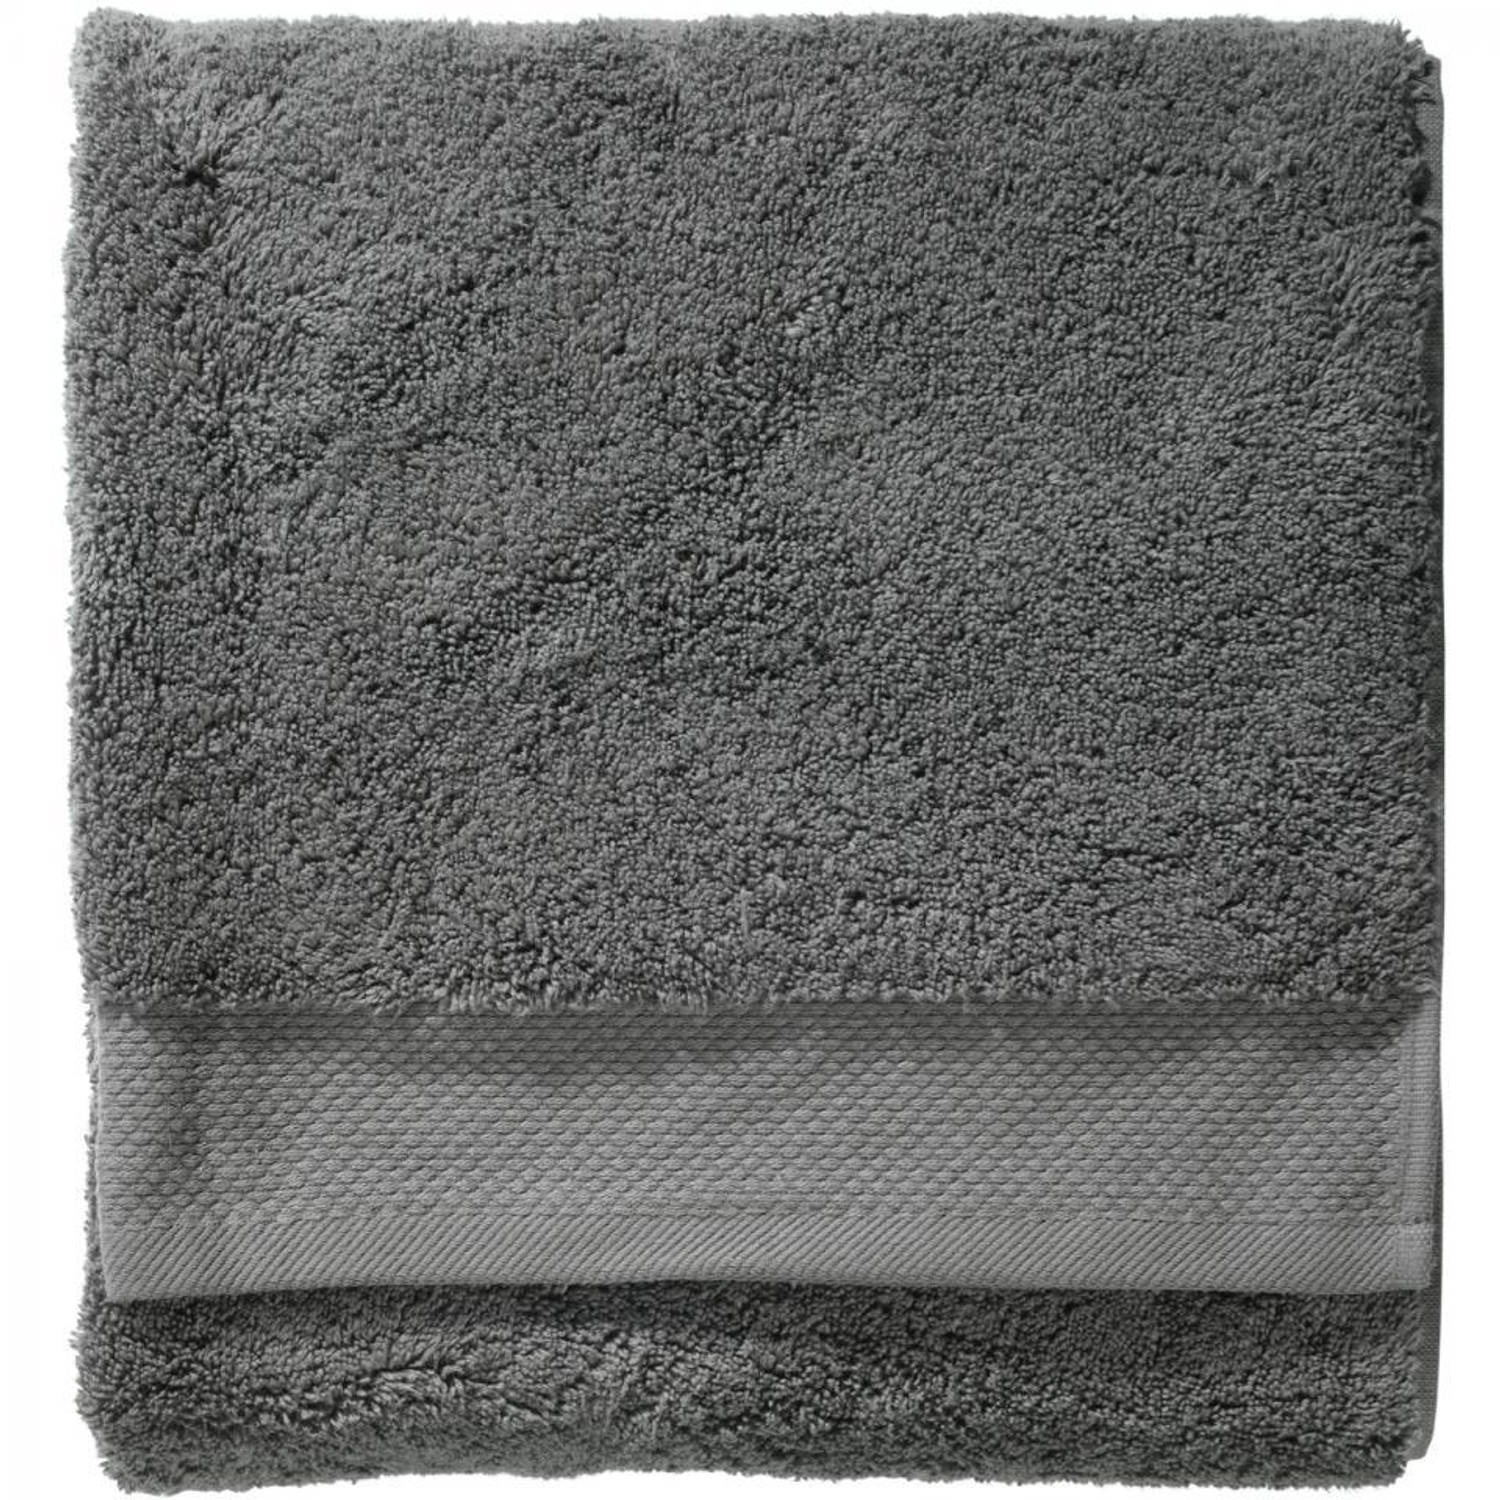 Blokker handdoek donkergrijs - 50 x 100 cm - | Blokker